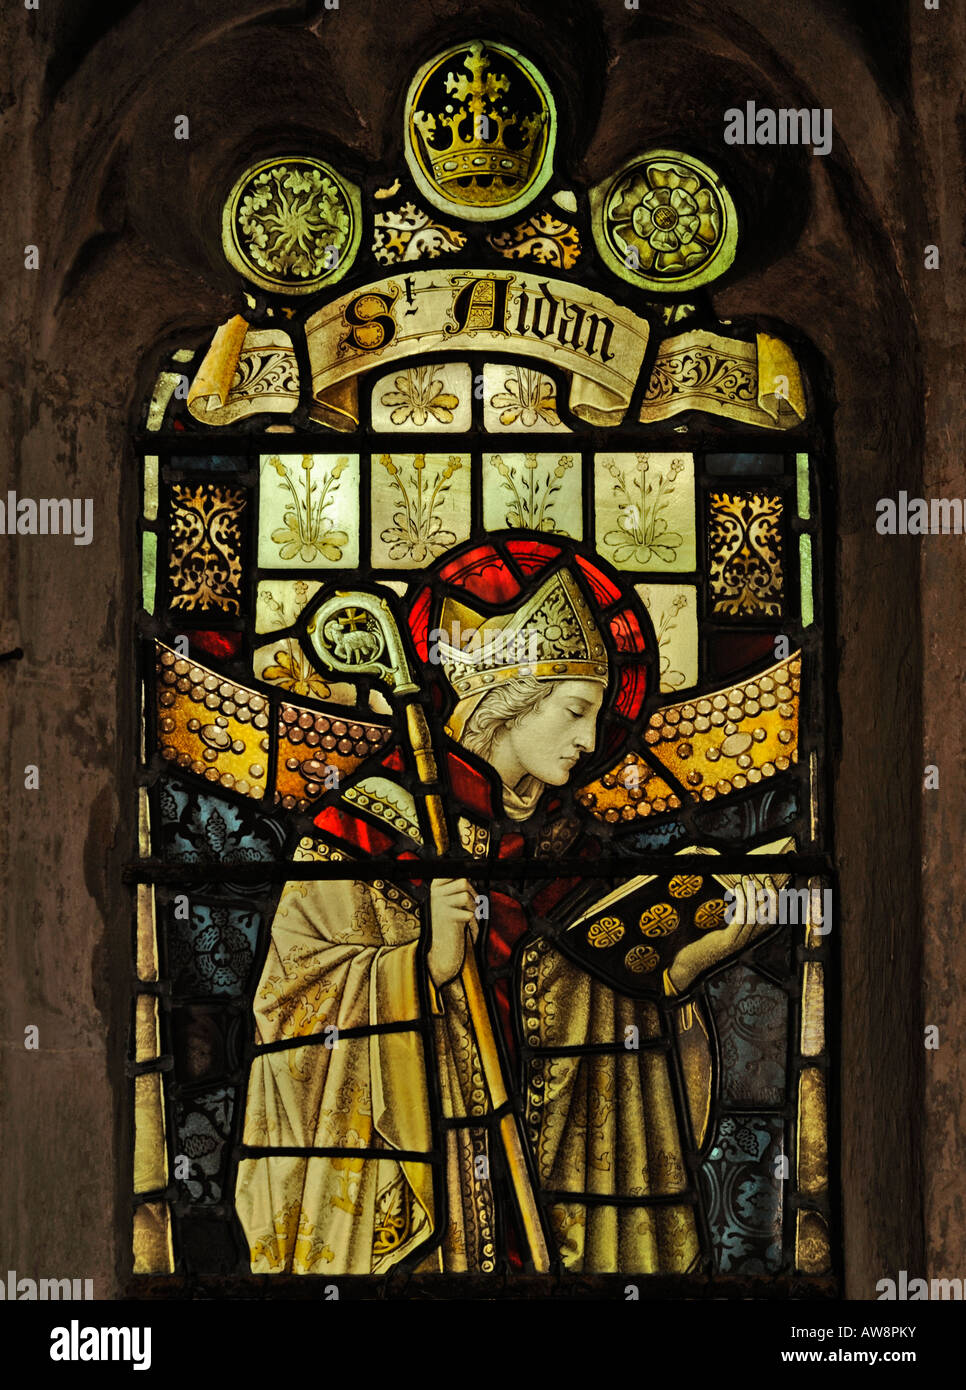 Saint Aidan (detail), Sanctuary North window. Church of Saint Cuthbert, Aldingham, Cumbria, England, United Kingdom, Europe. Stock Photo